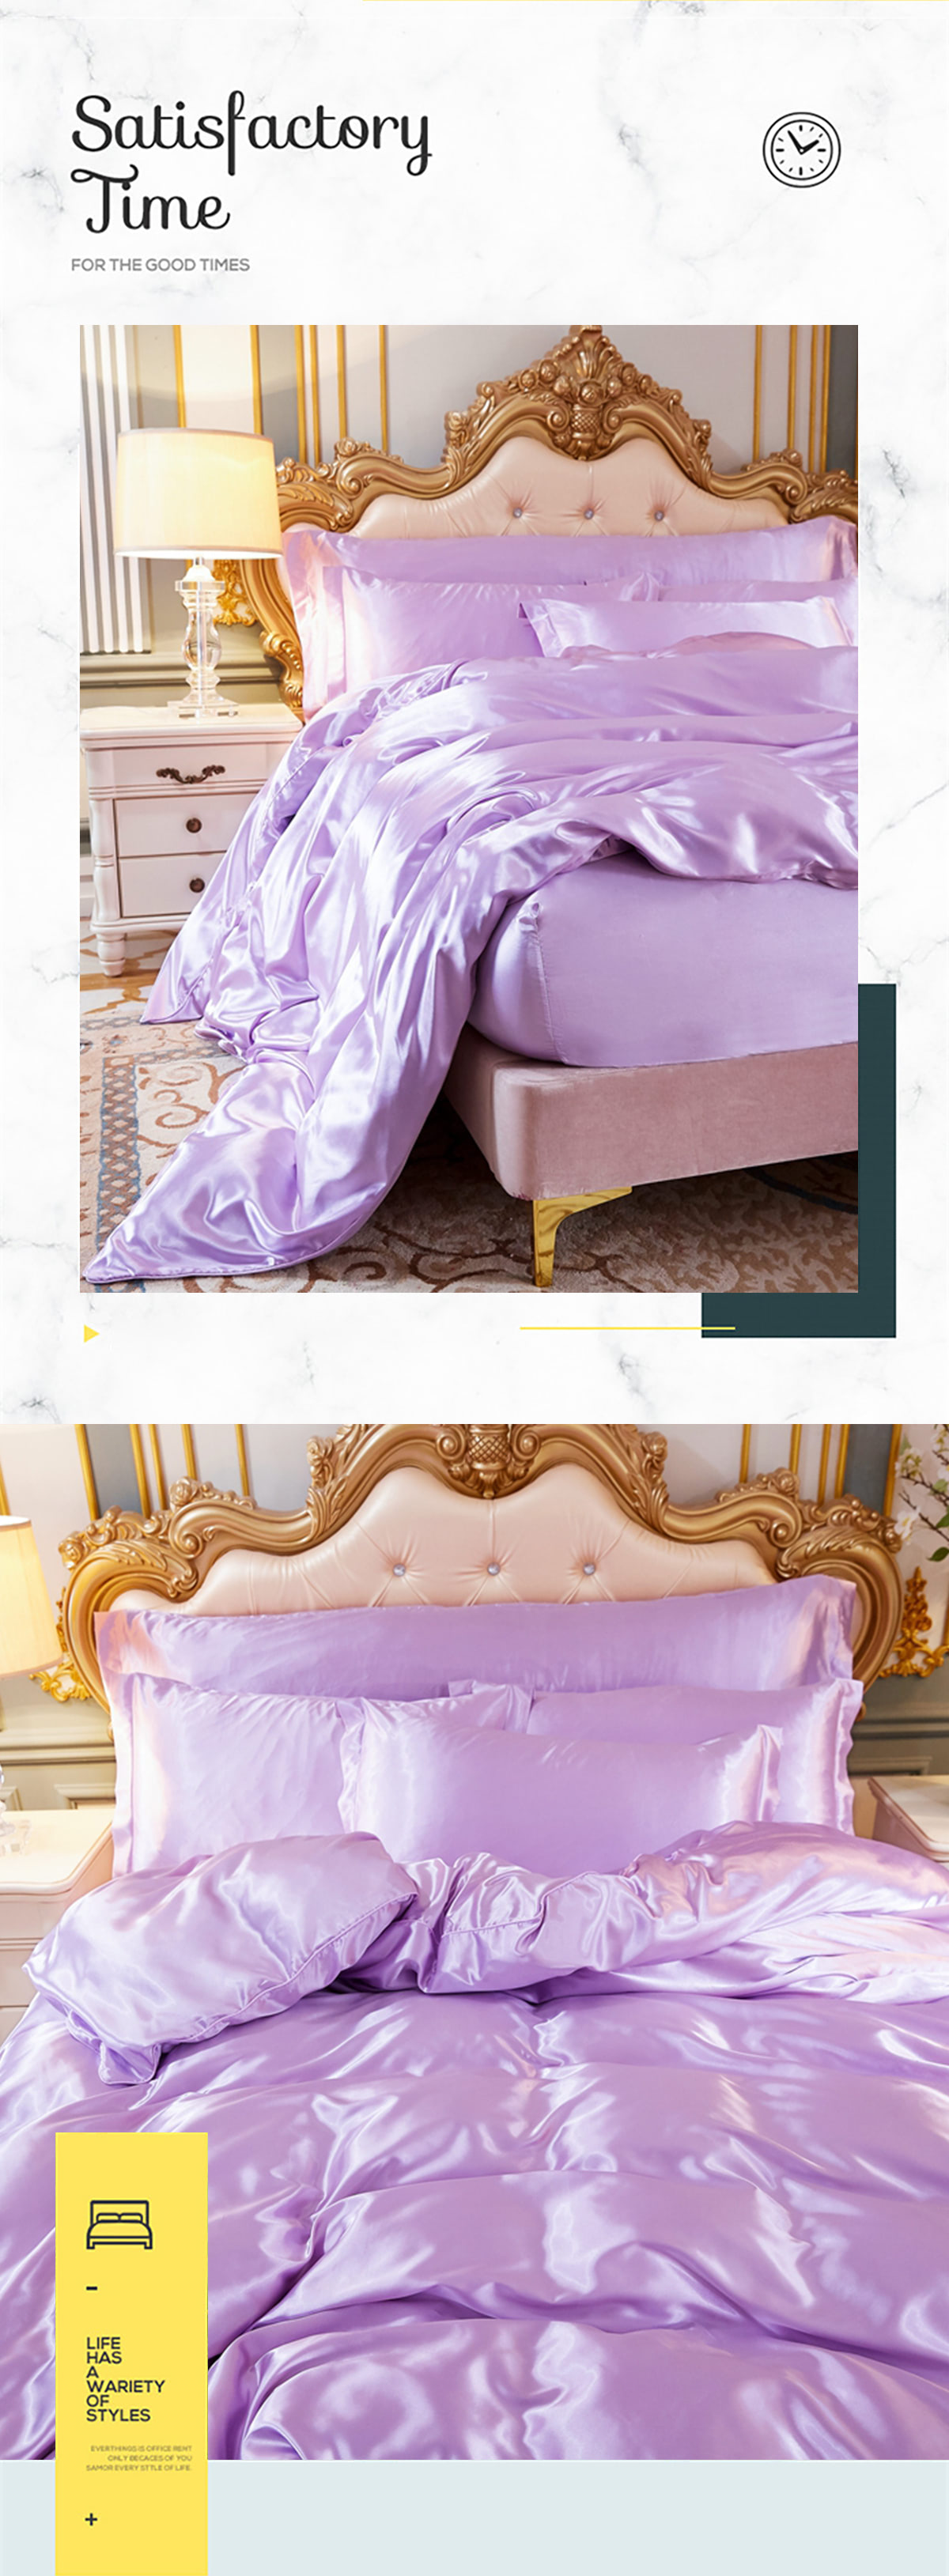 Home-Textile-Simple-Satin-Bedding-Set-Quilt-Cover-Pillowcases23.jpg